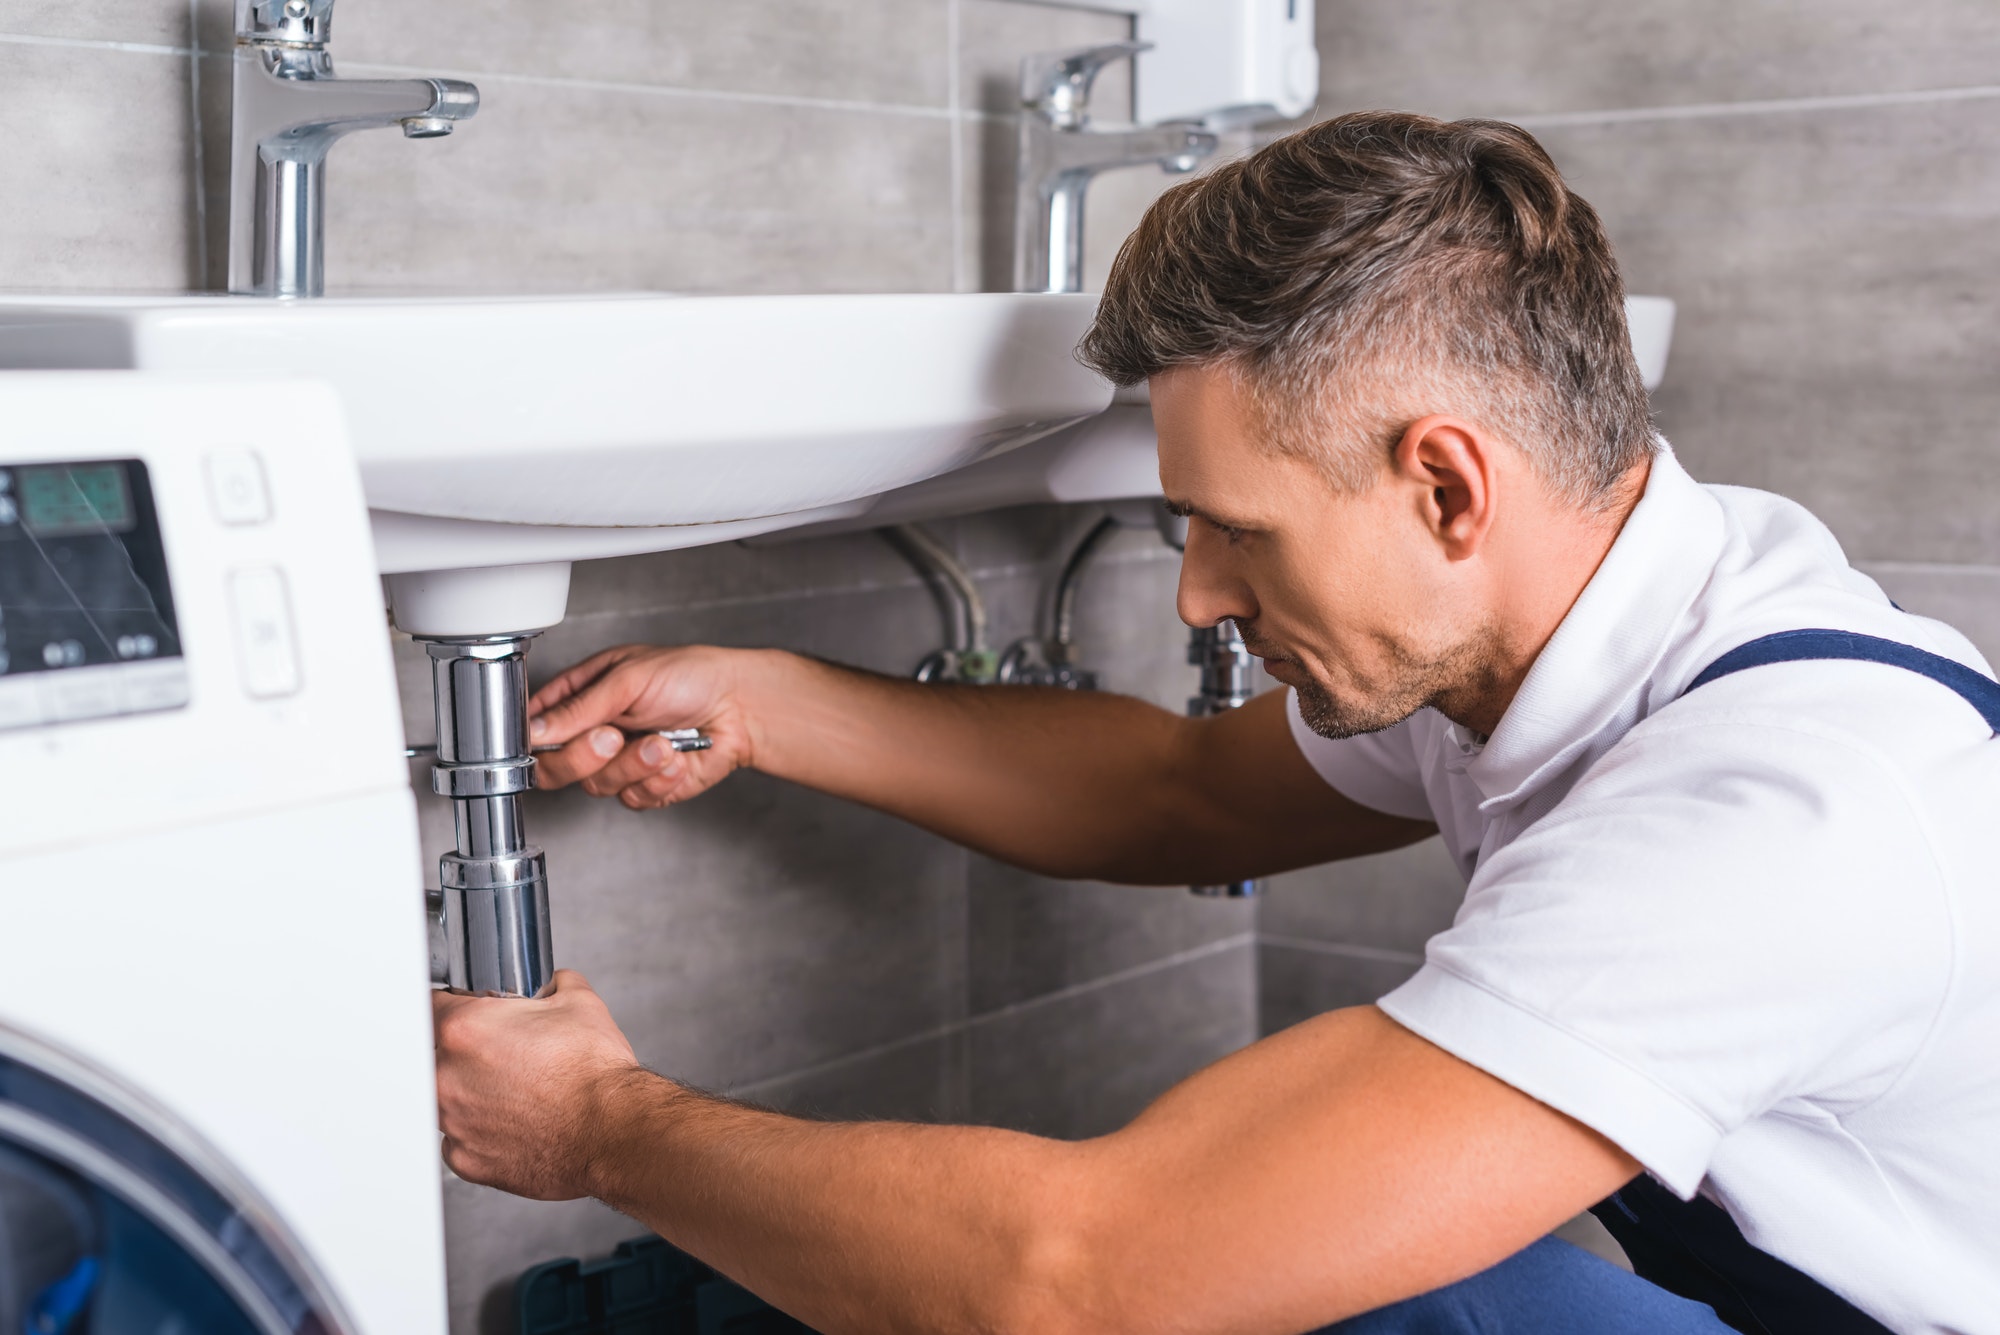 adult plumber fixing sink at bathroom